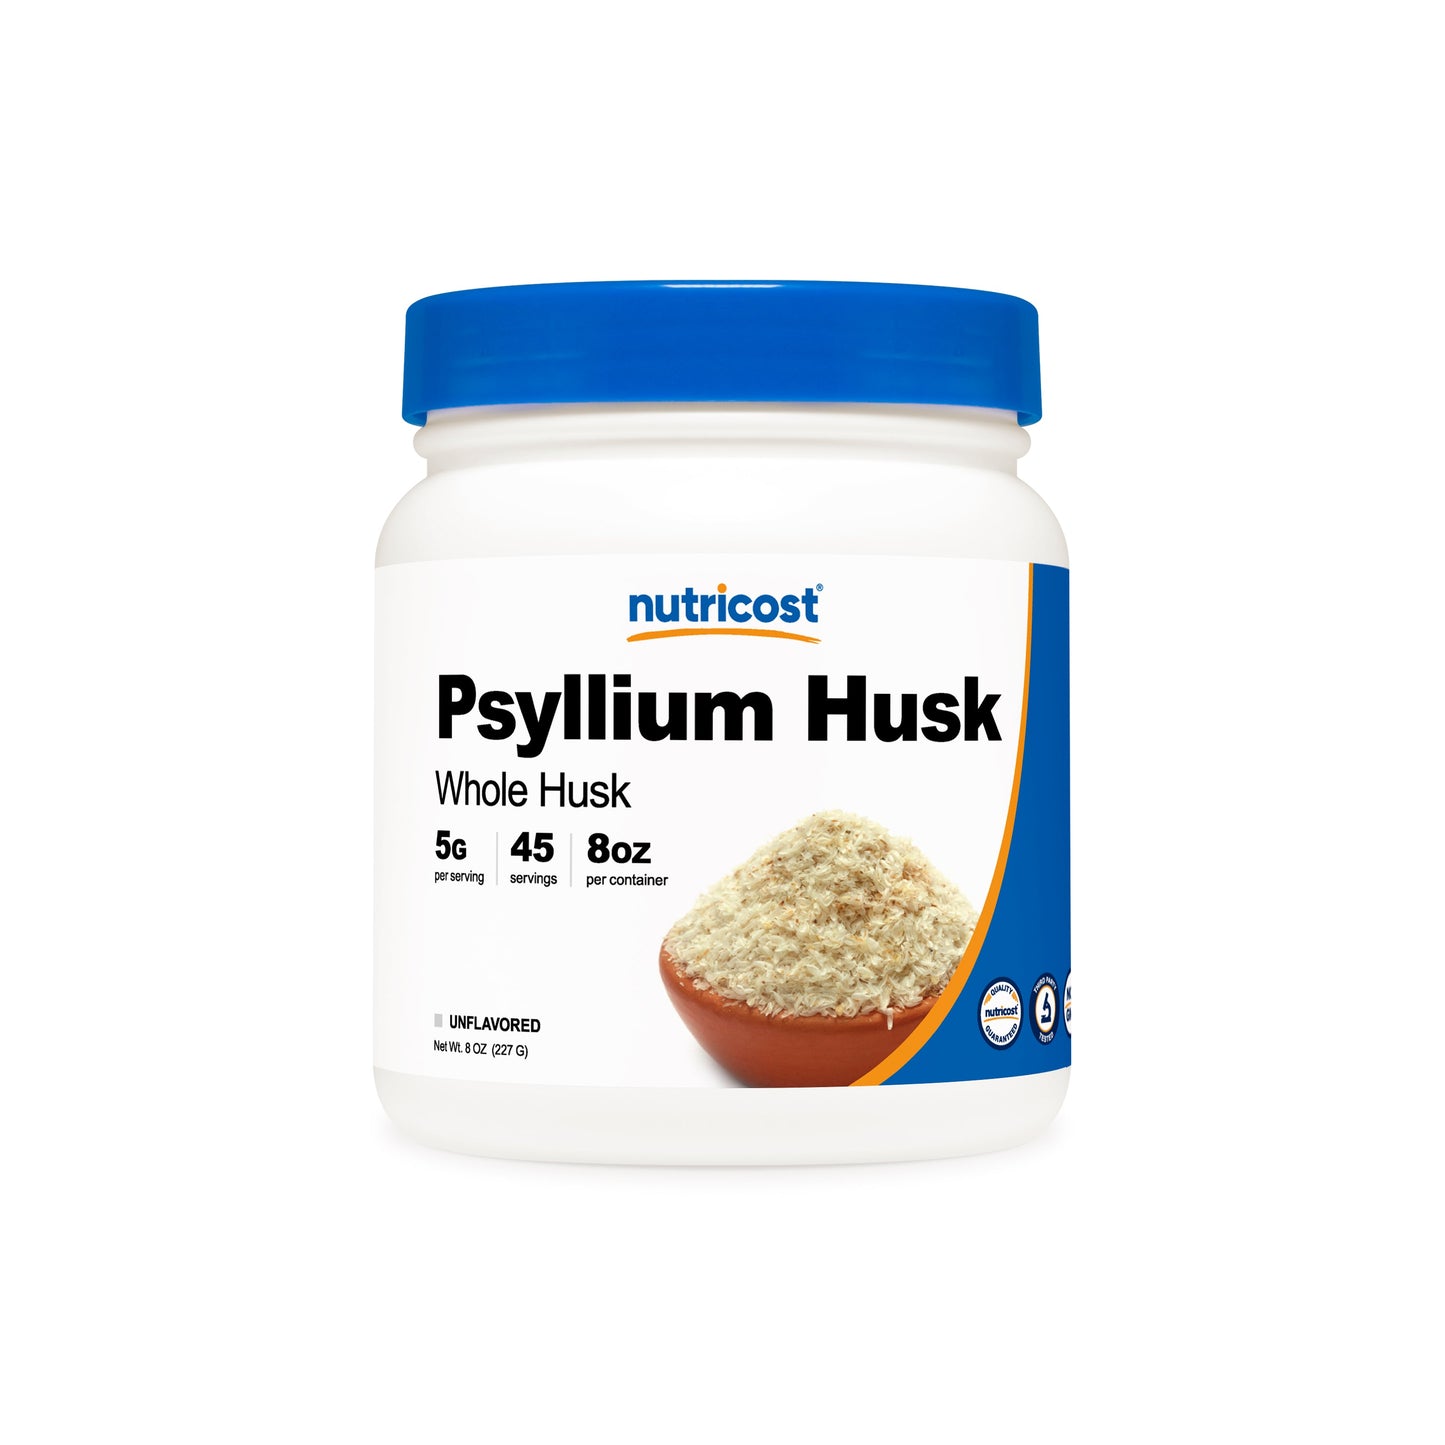 Nutricost Psyllium Husk (Whole Husk) Powder